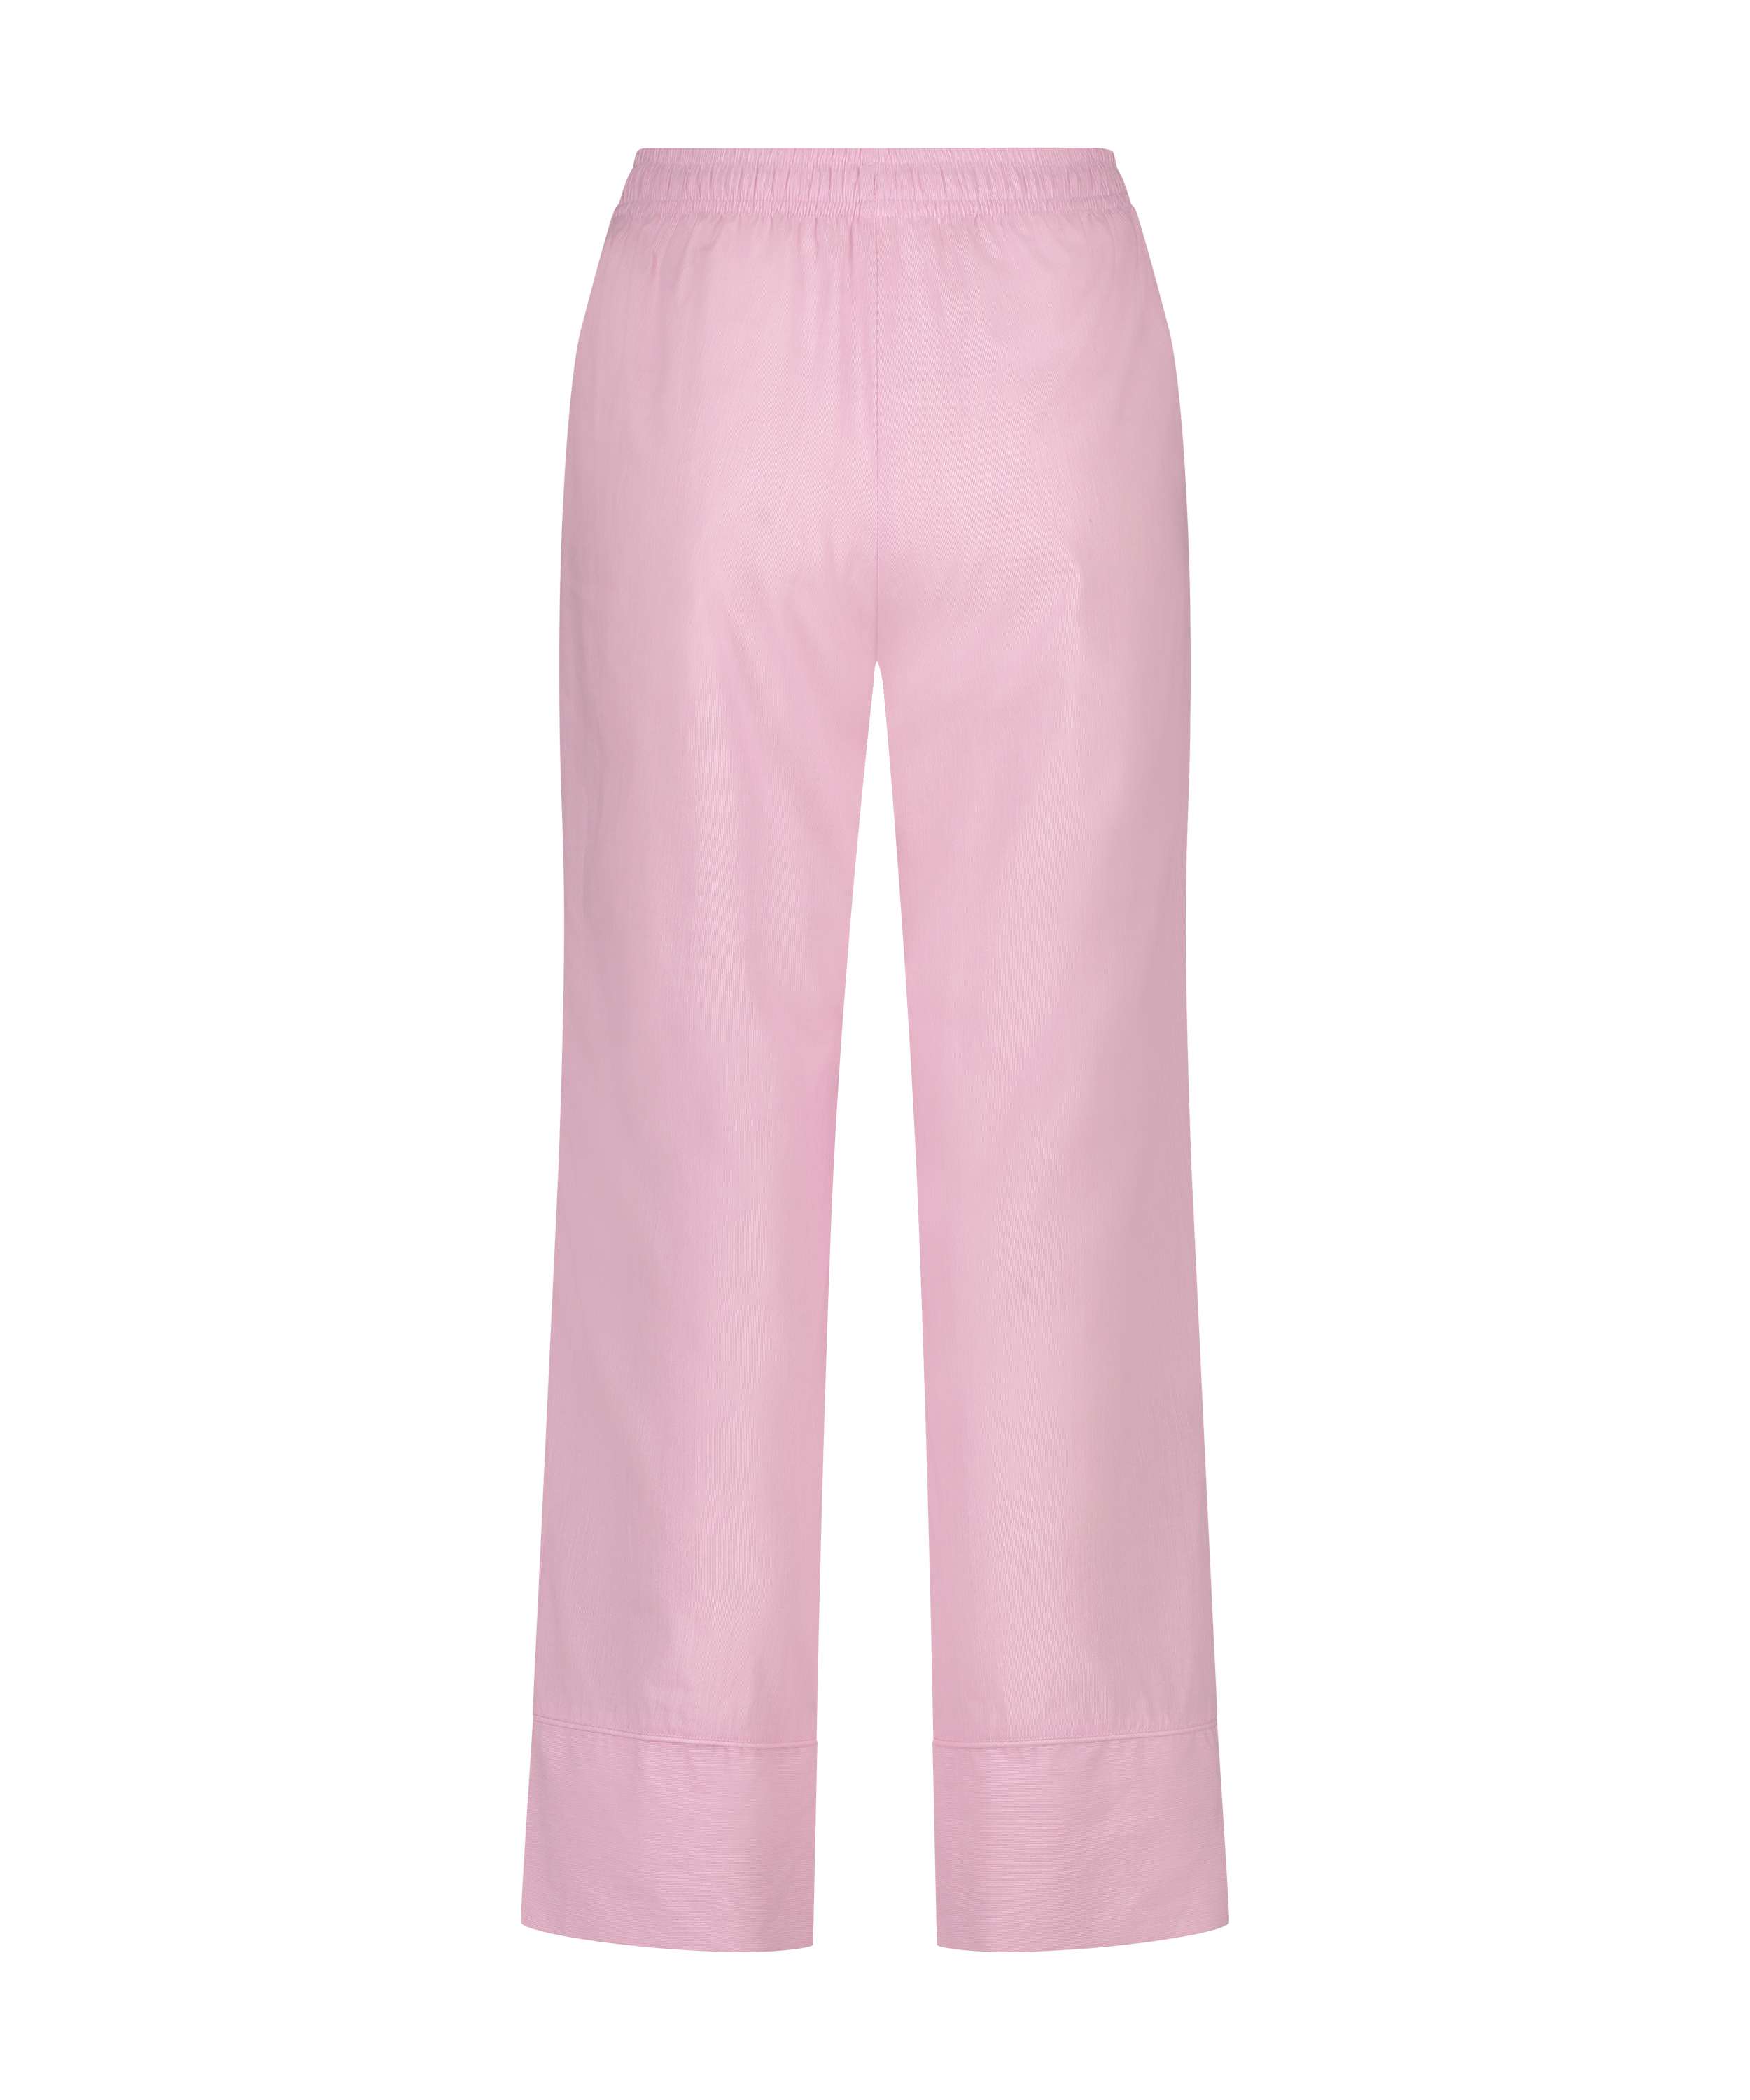 Cotton Pants, Pink, main